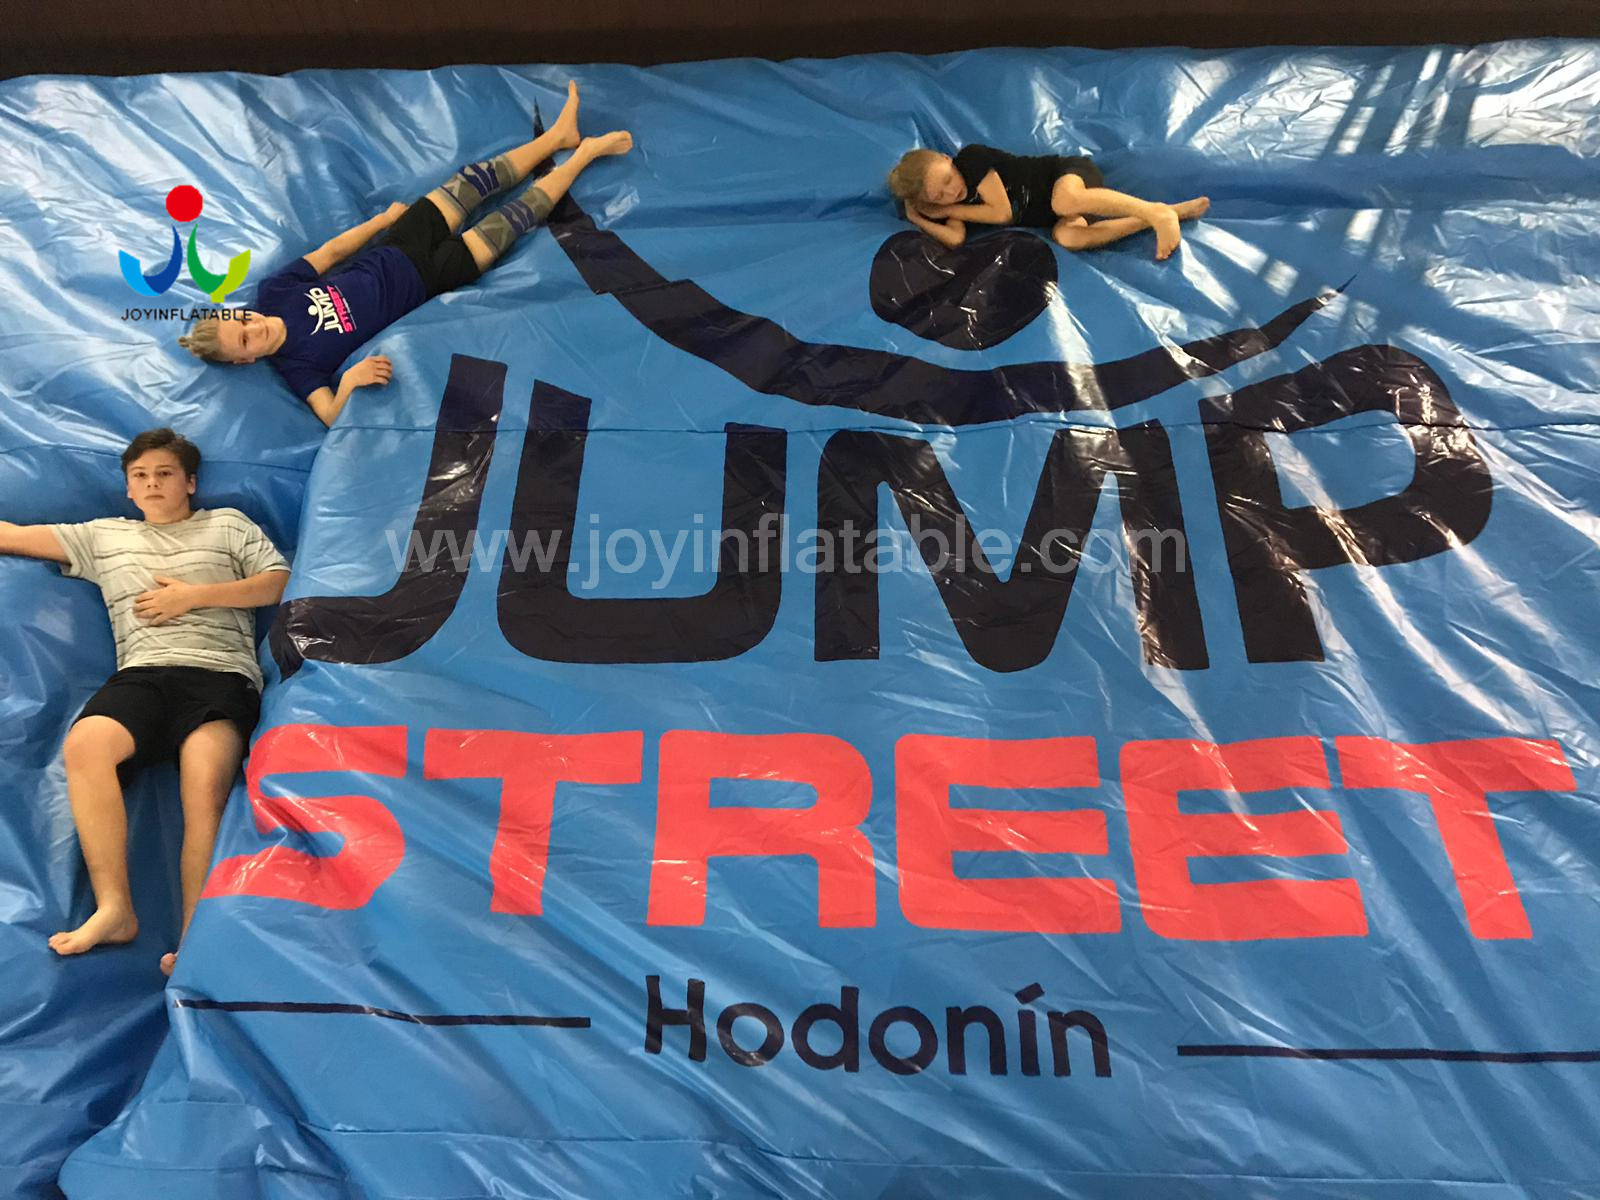 JOY inflatable bag jump airbag supply for high jump training-2